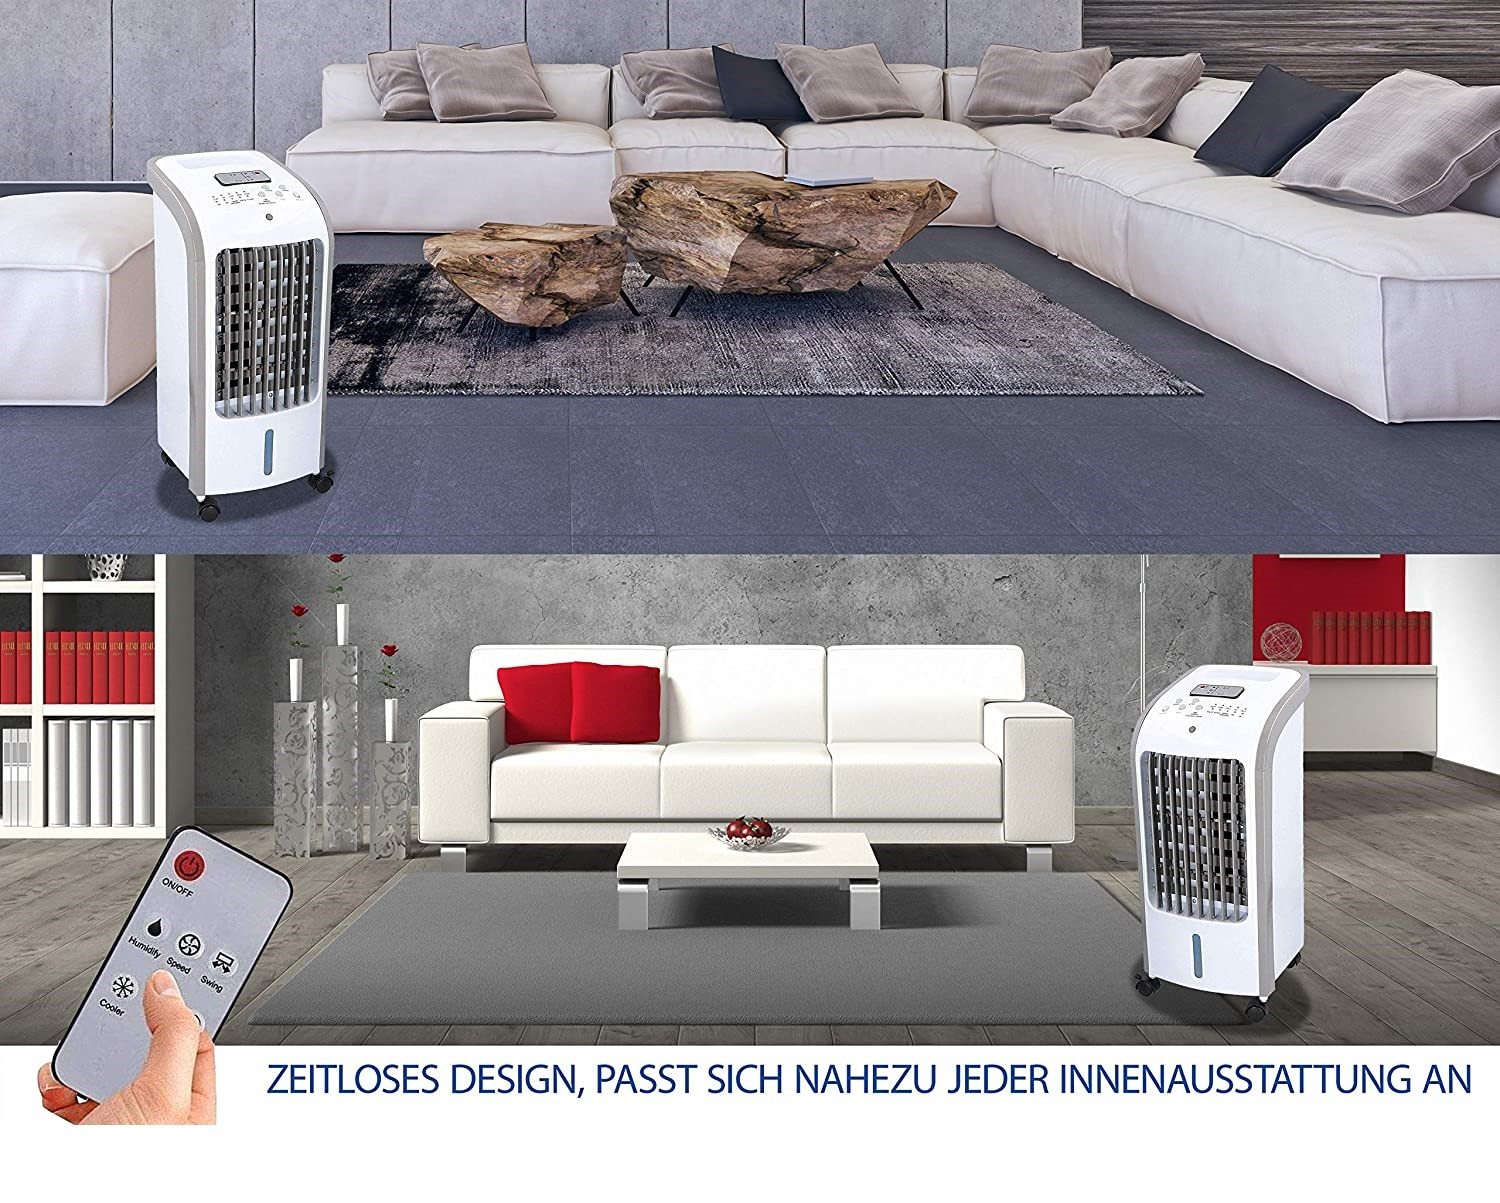 JUNG ALPINA Aircooler Klimagerät Inkl. Raumgröße: mit + m², (Max. 35 weiß Timer Wasserkühlung, EEK: A+) Fernbedienung